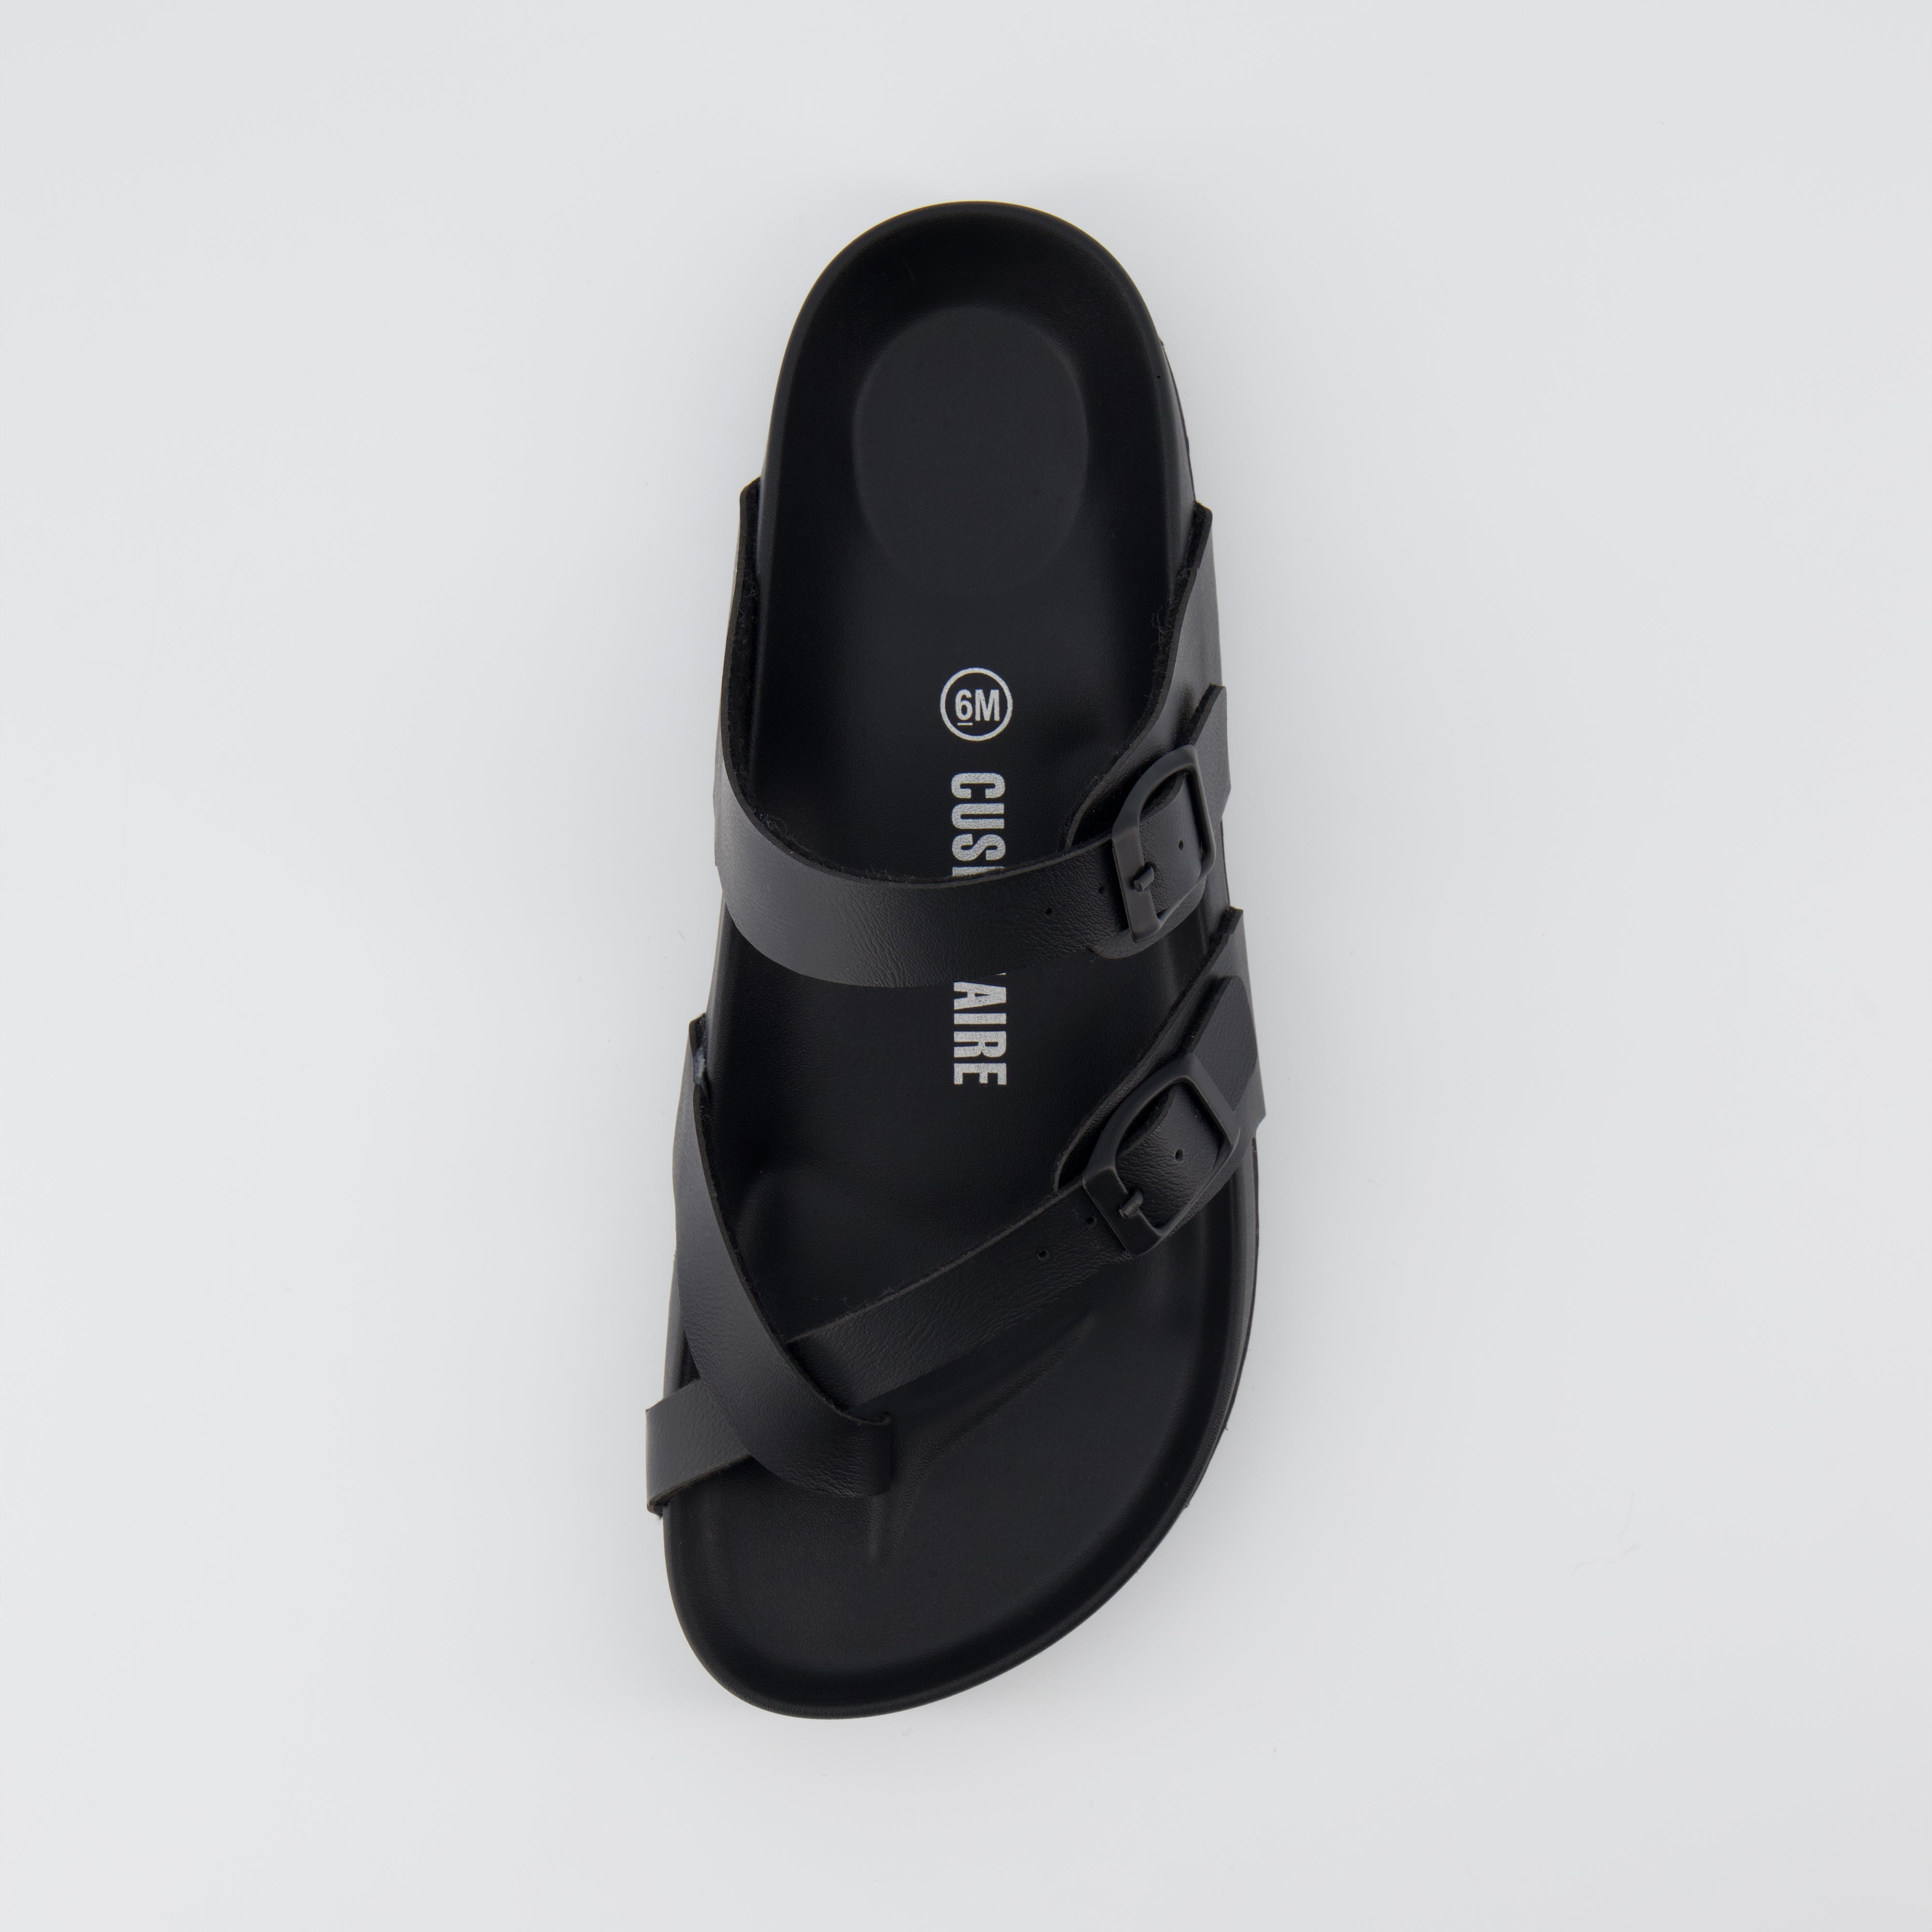 Laker EVA Footbed Sandal